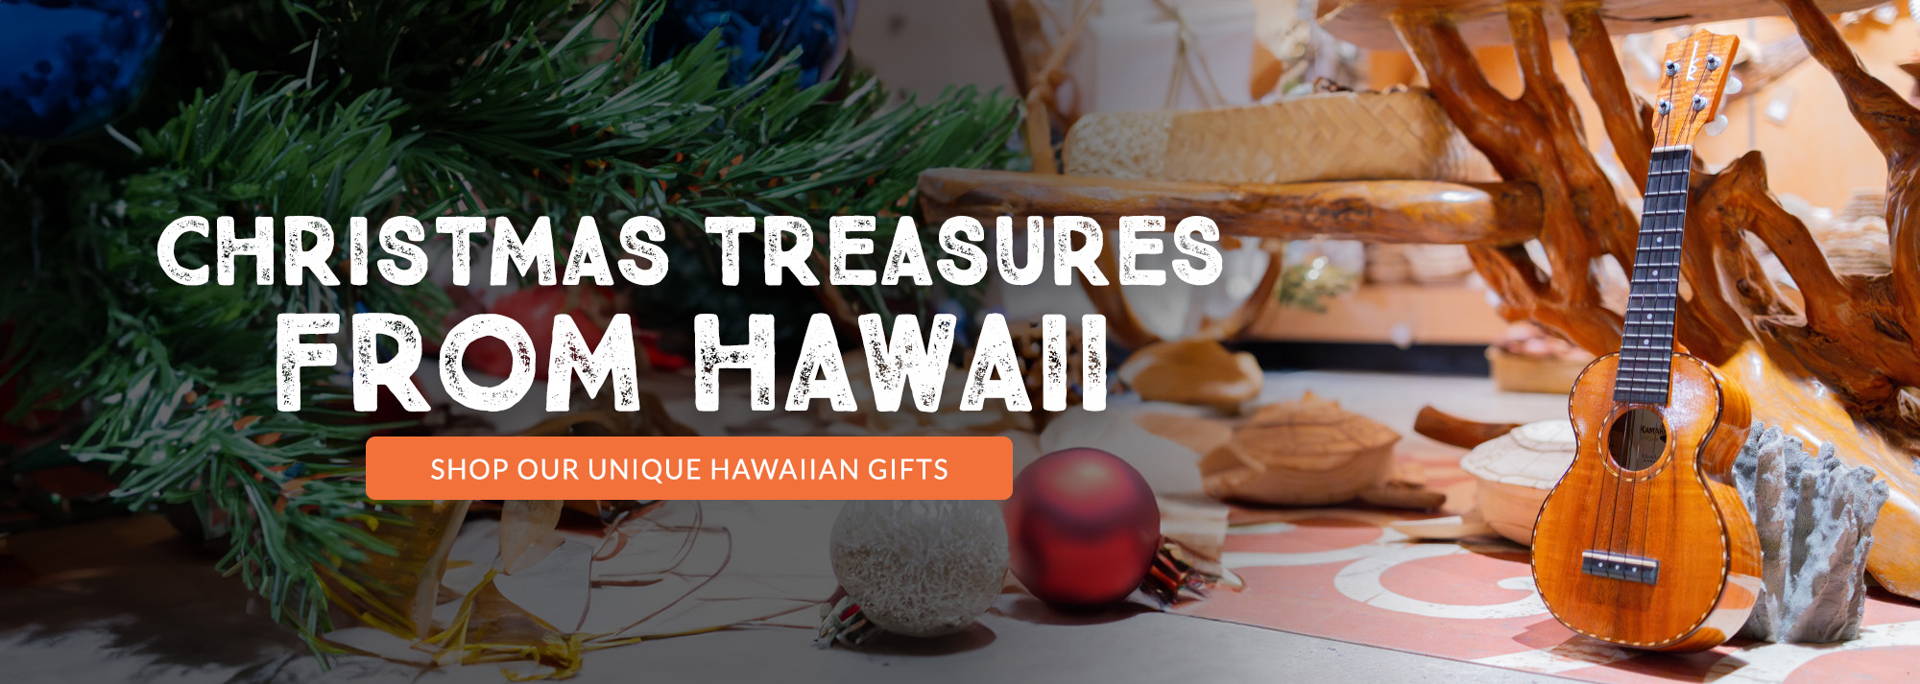 Christmas Treasures from Hawaii - The Hawaii Store